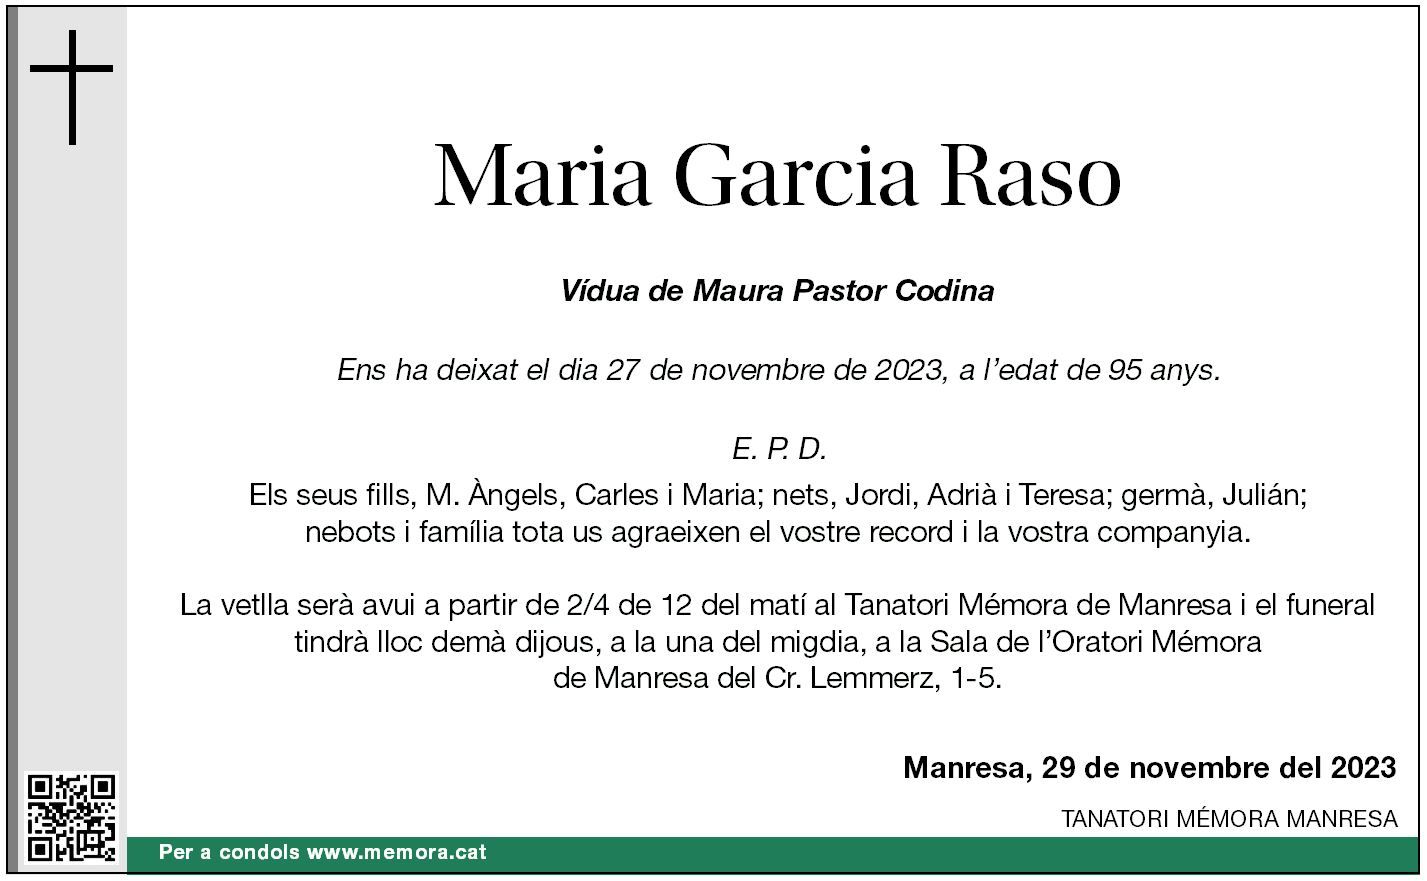 Maria Garcia Raso